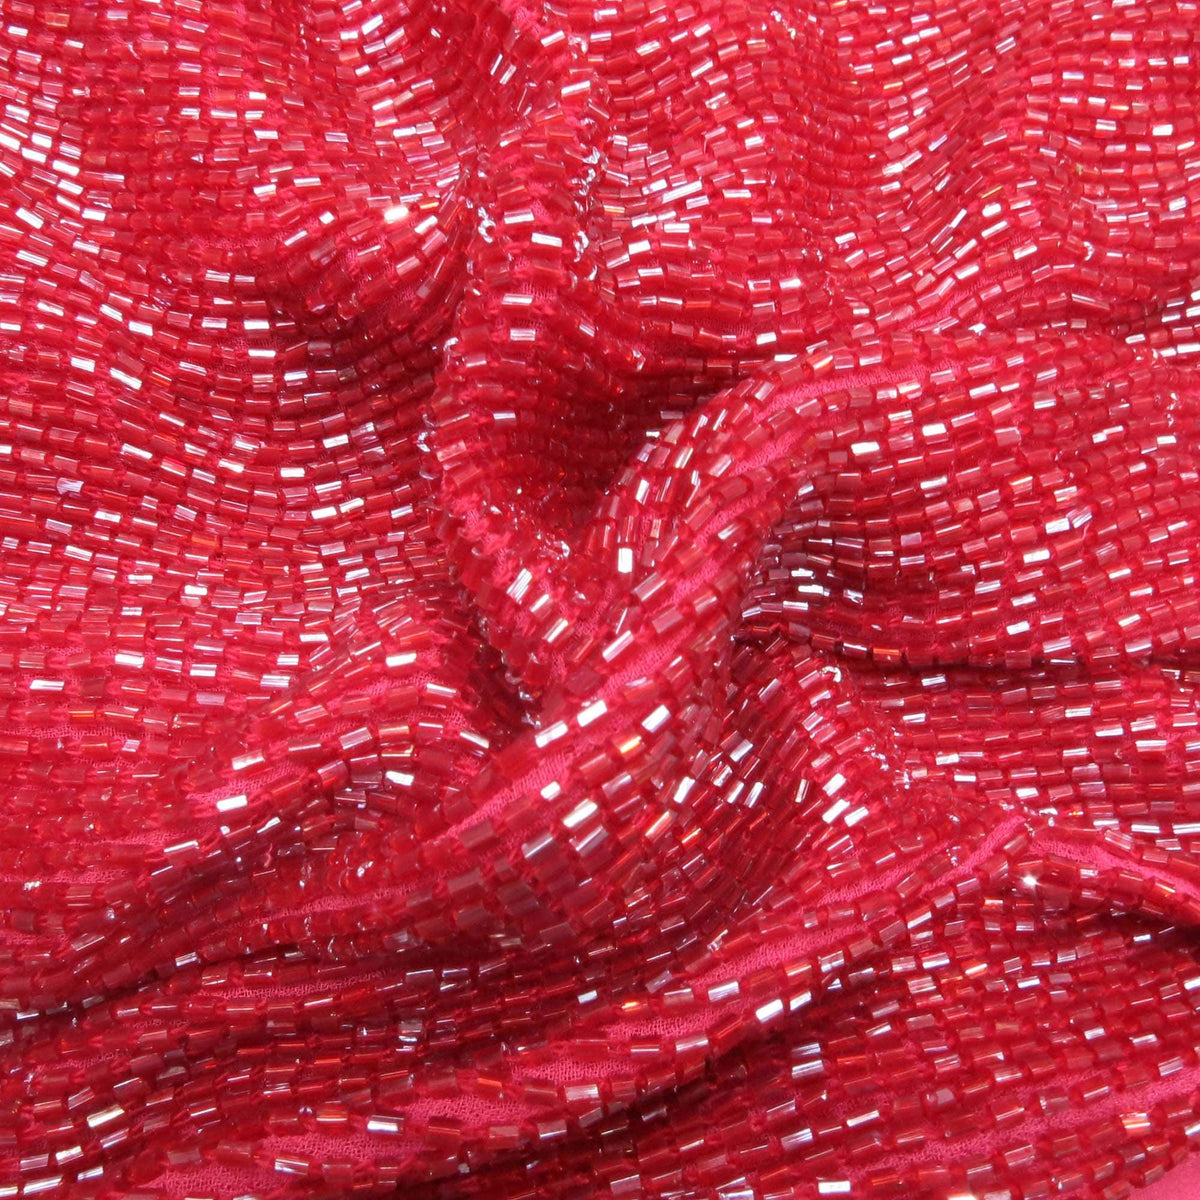 Tomato Red Sequin & Beads on Silk Chiffon JEC-009-6 Fabric